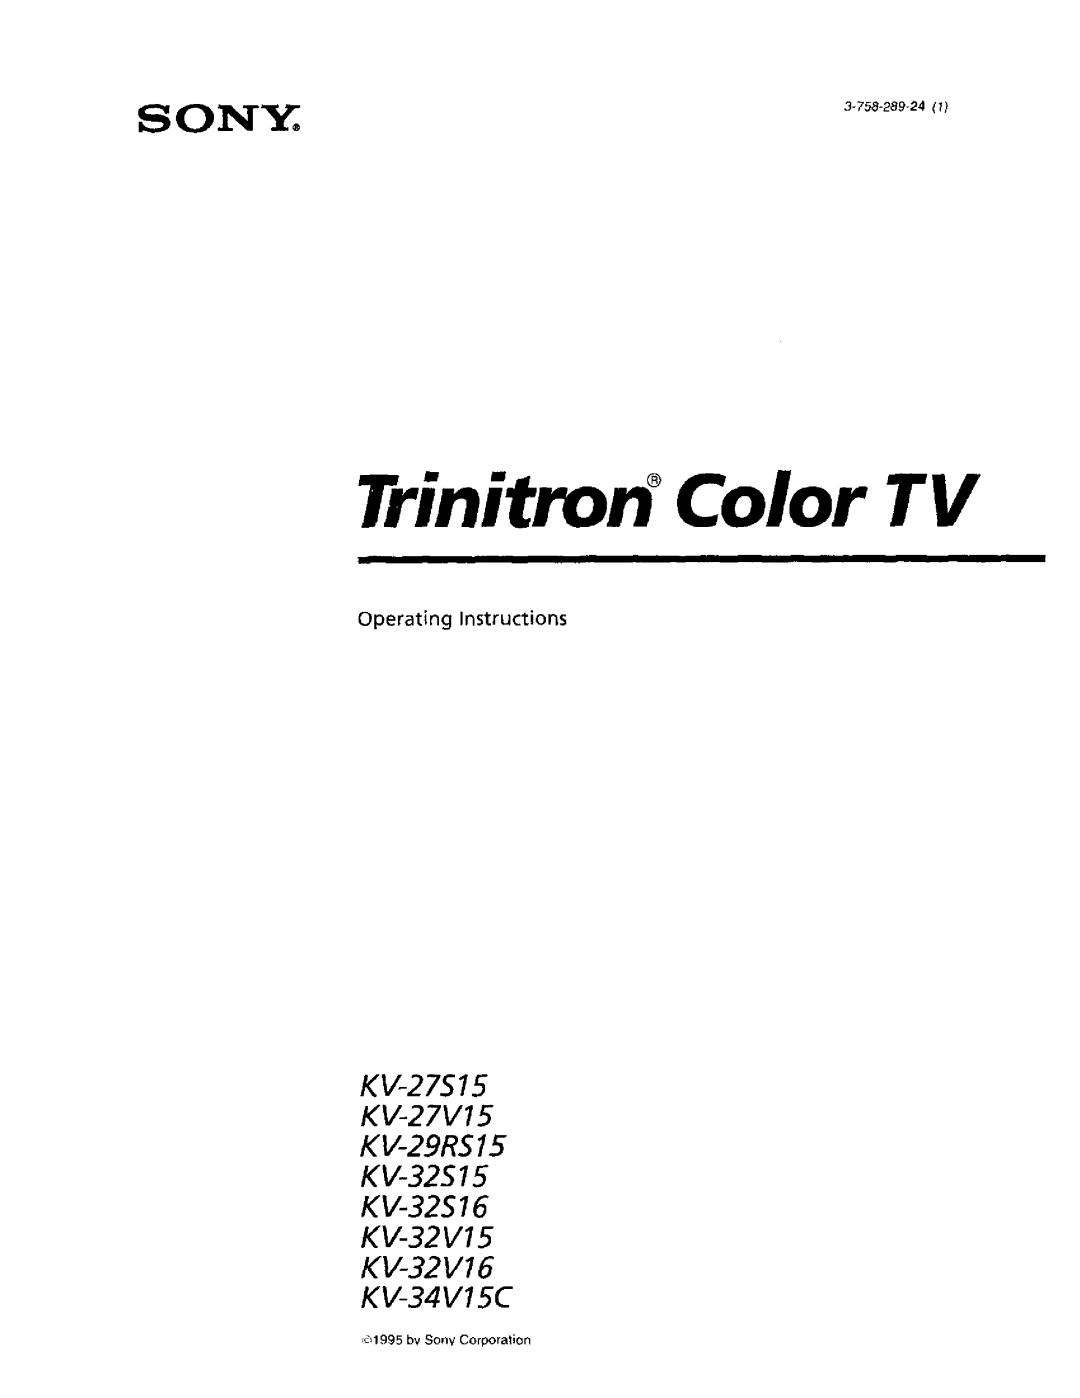 Sony KV-27S15 operating instructions Operating Instructions, Trinitron CoIor TV, KV-34V15C, c%1995 bv Sony Corporation 